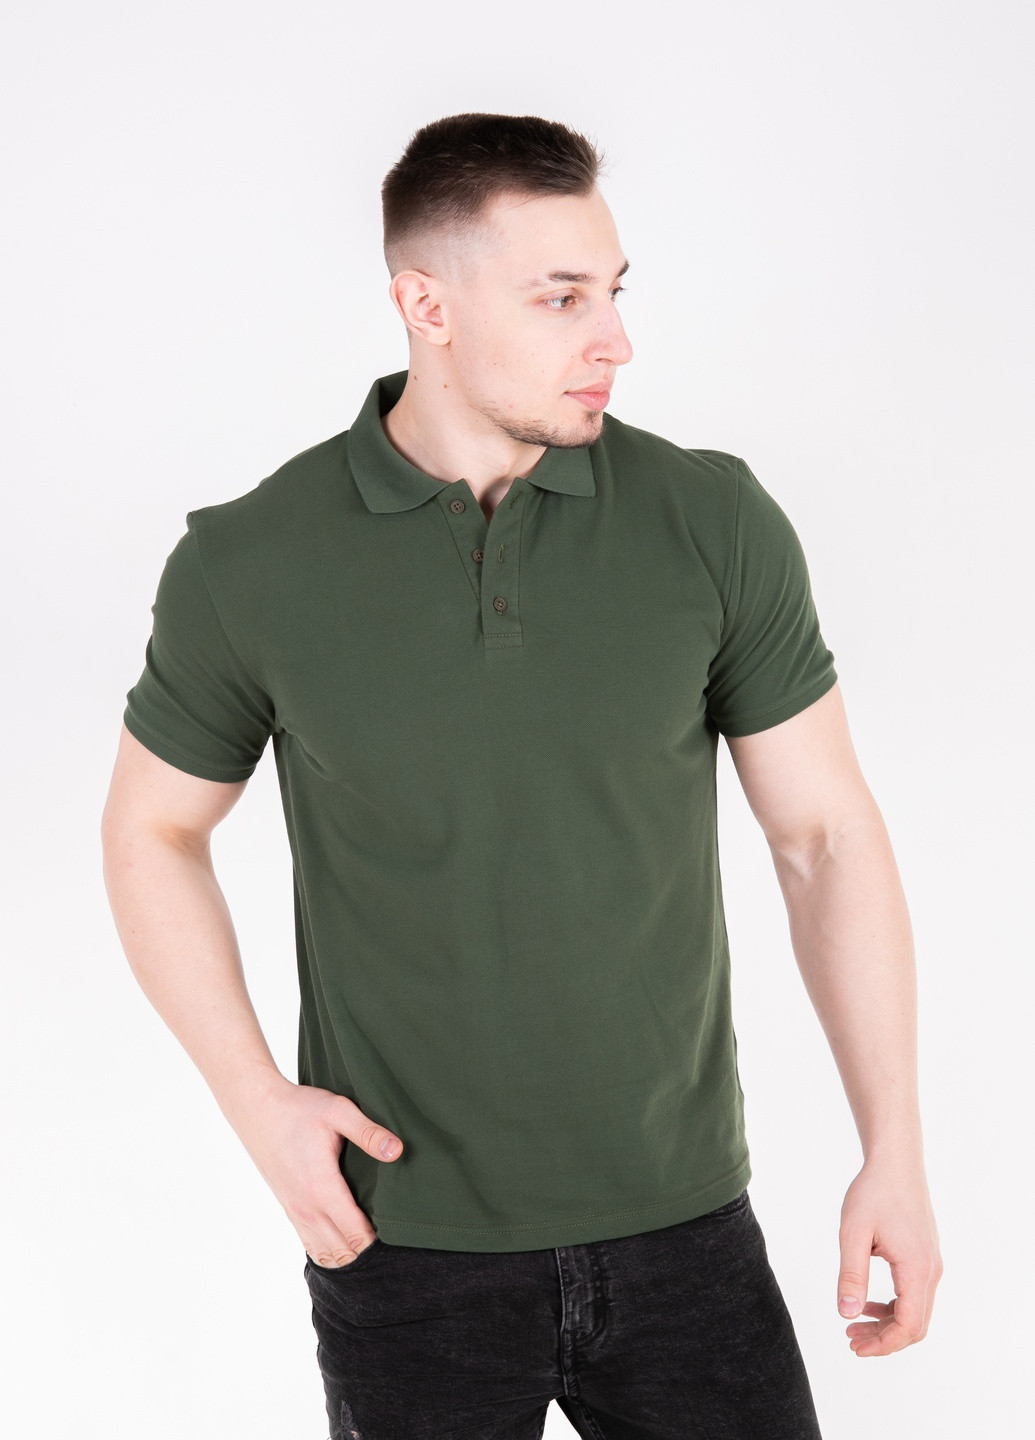 Оливковая (хаки) футболка-футболка поло мужская для мужчин TvoePolo однотонная